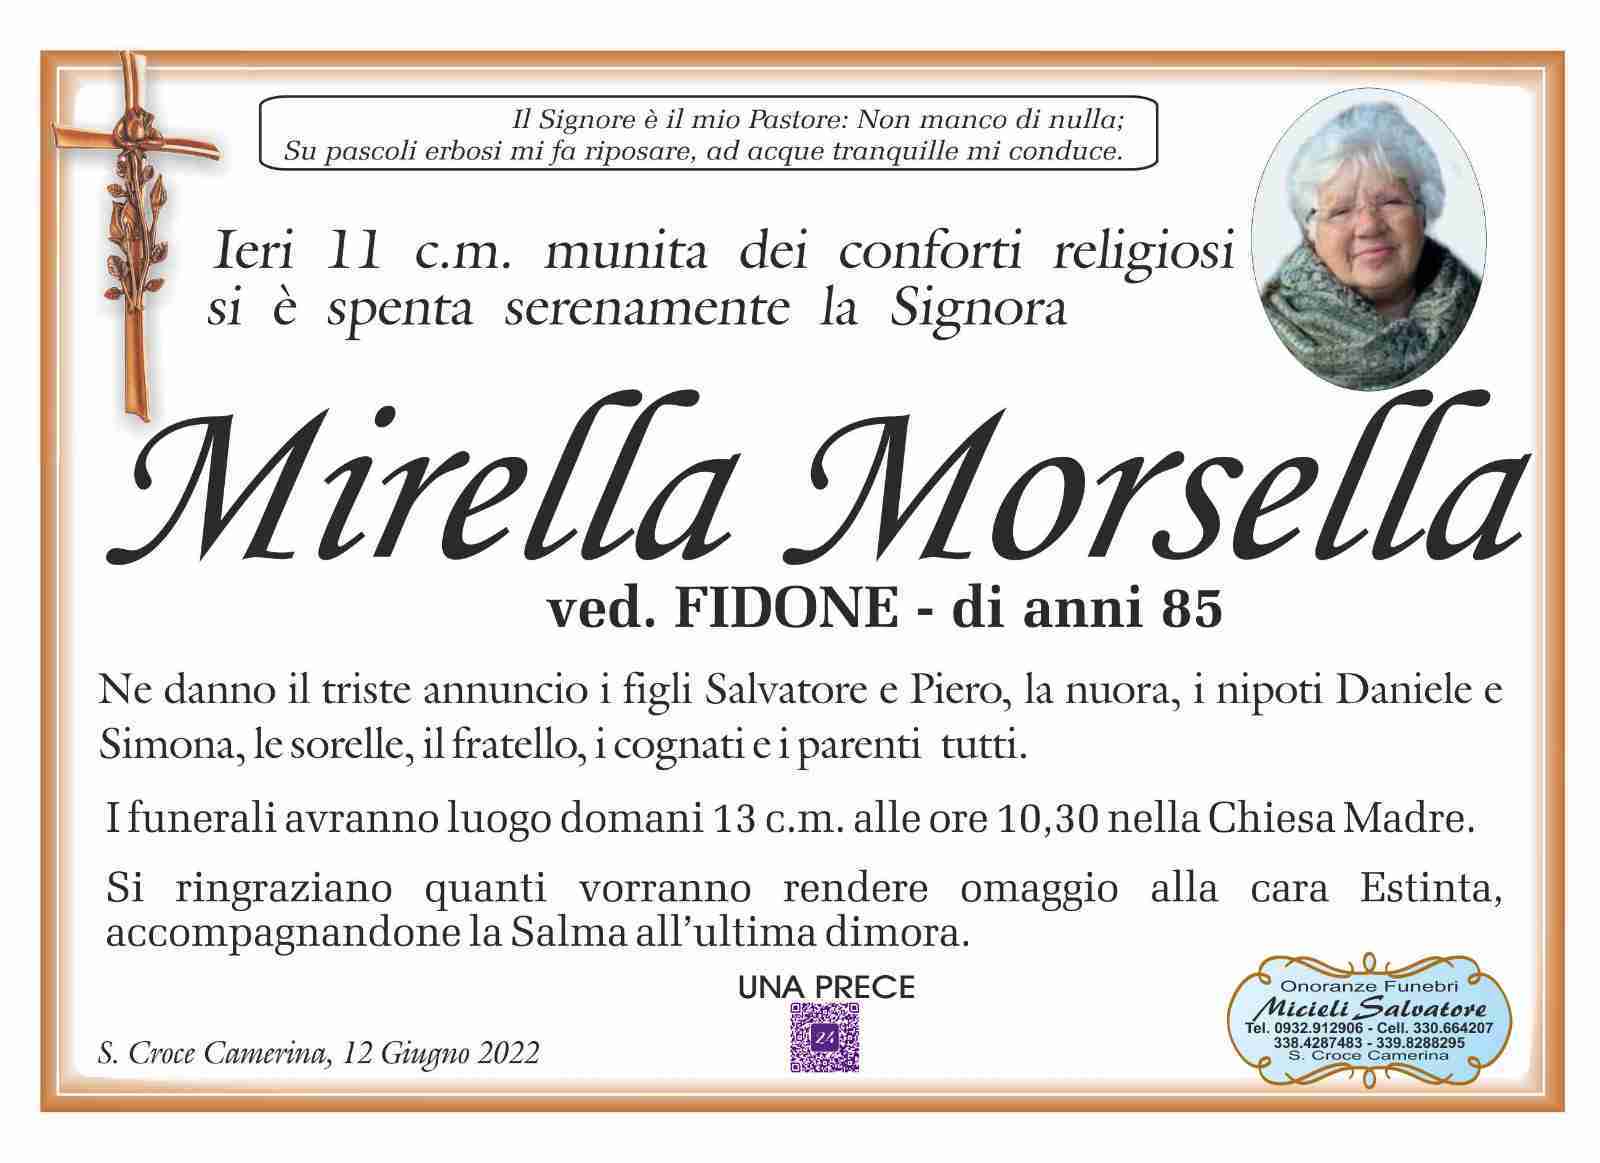 Mirella Morsella